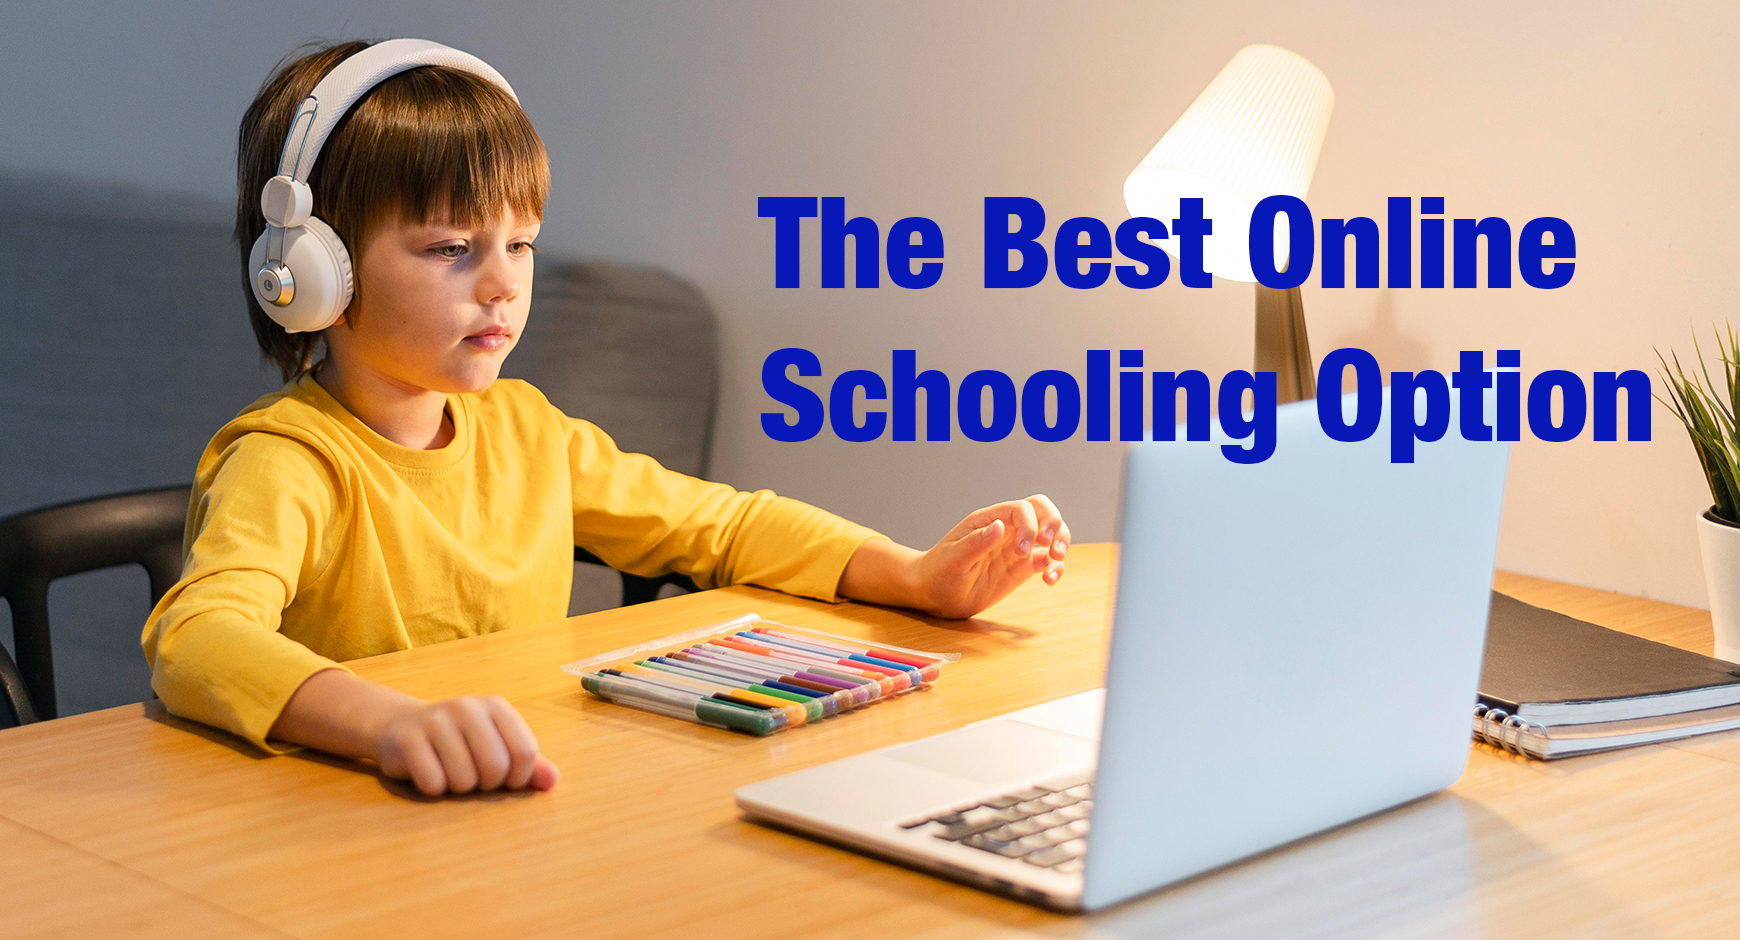 CSKM - The Best Online Schooling Option